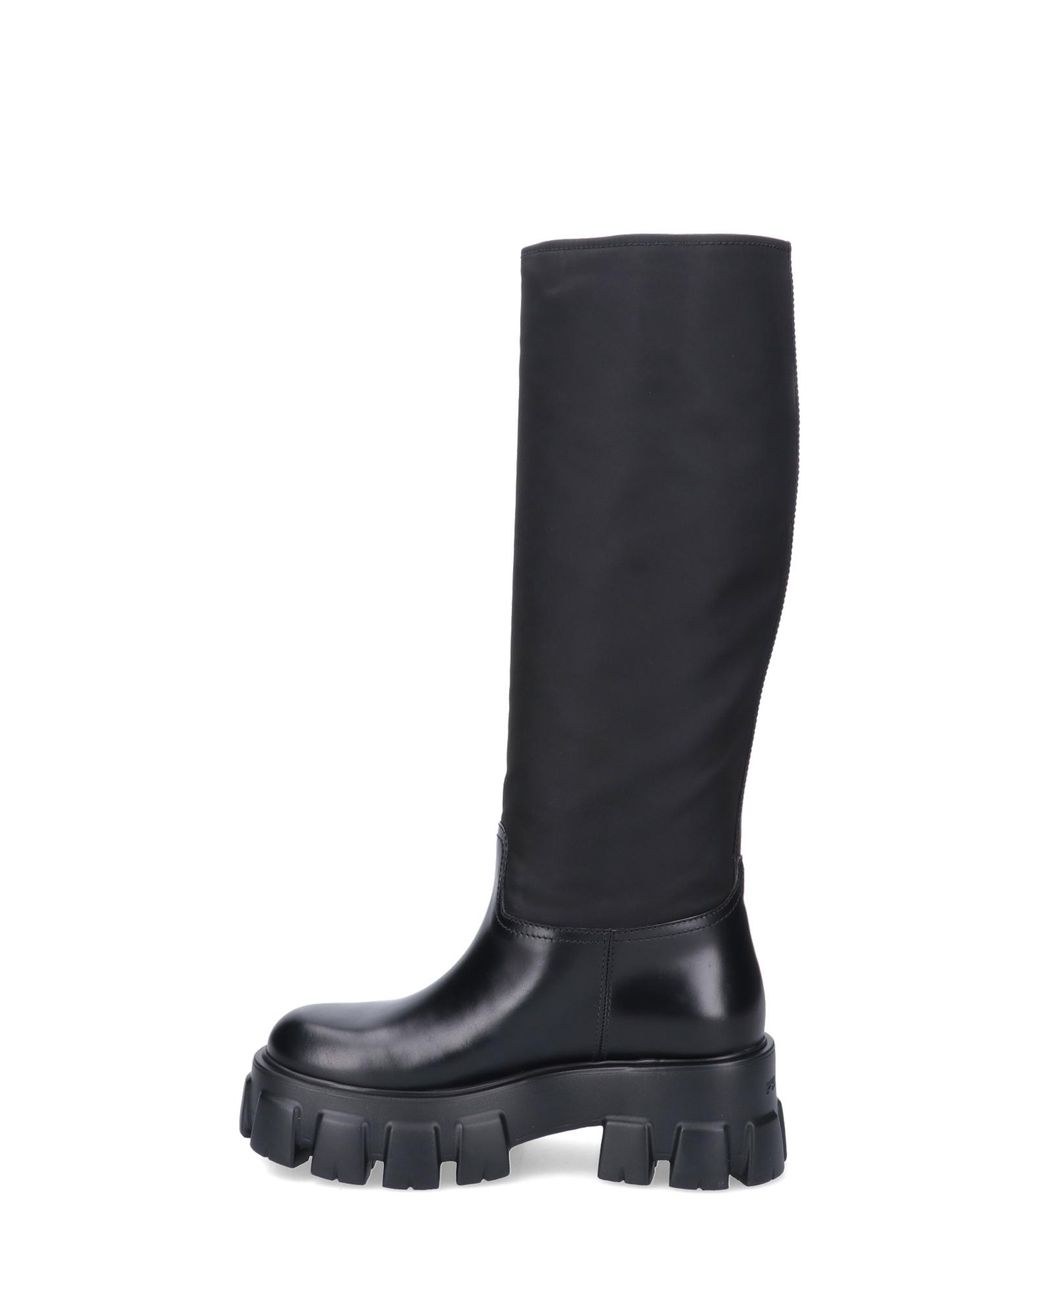 Prada Nylon High Boots in Black | Lyst